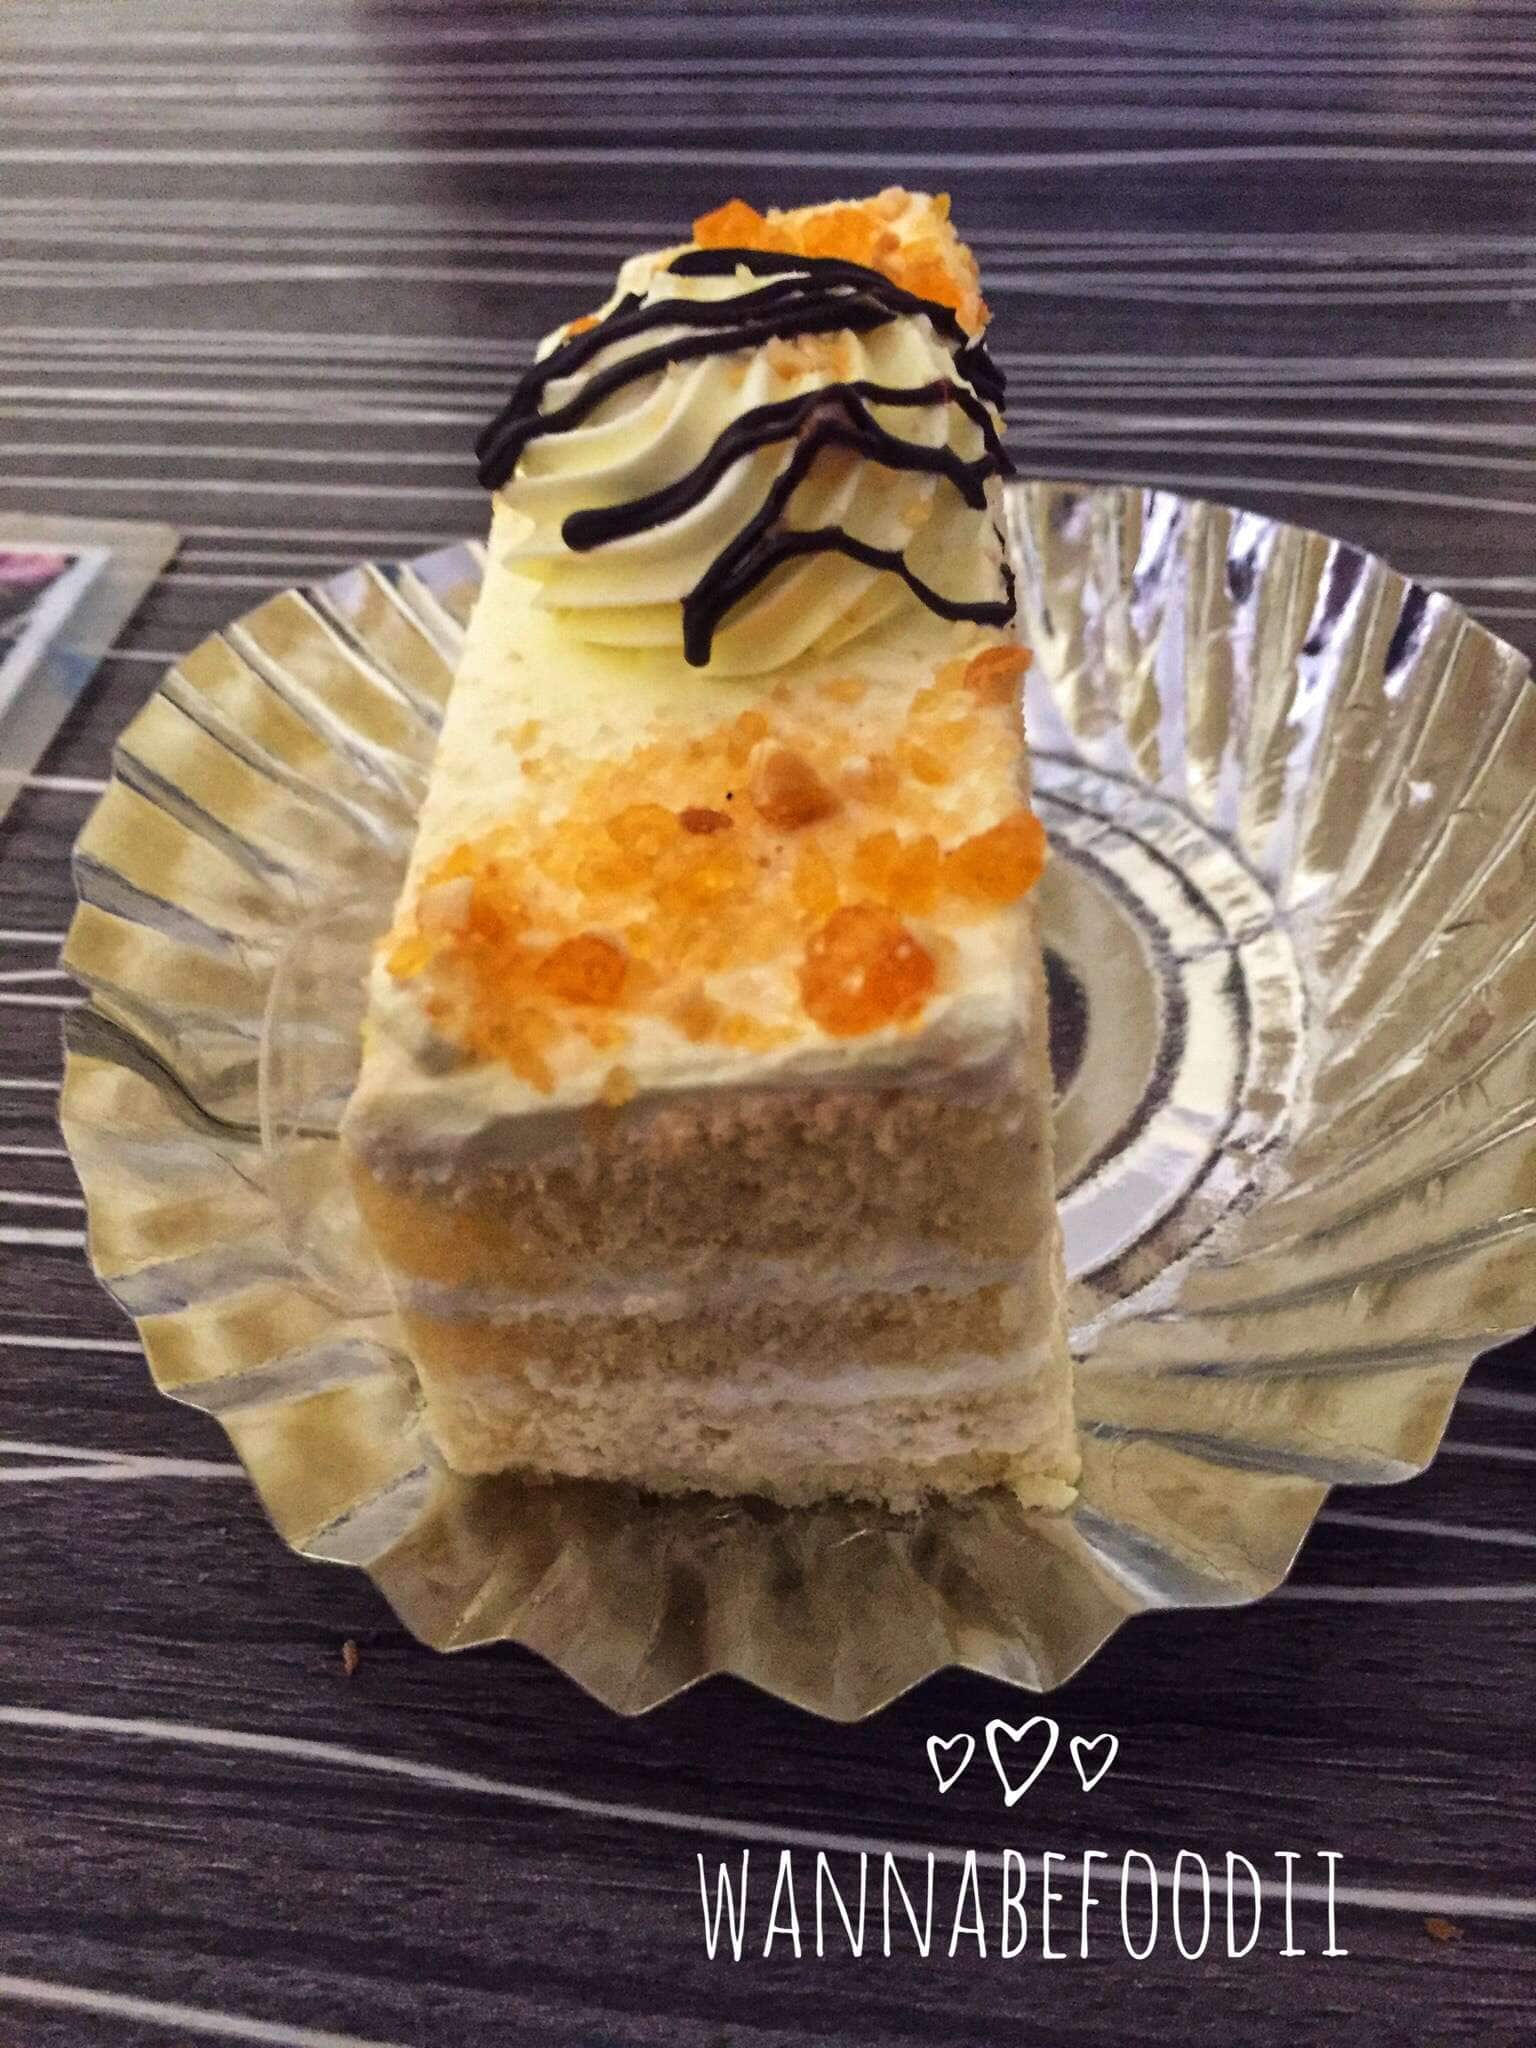 Vanilla Cakes Online, Order Eggless Vanilla Cake - FNP